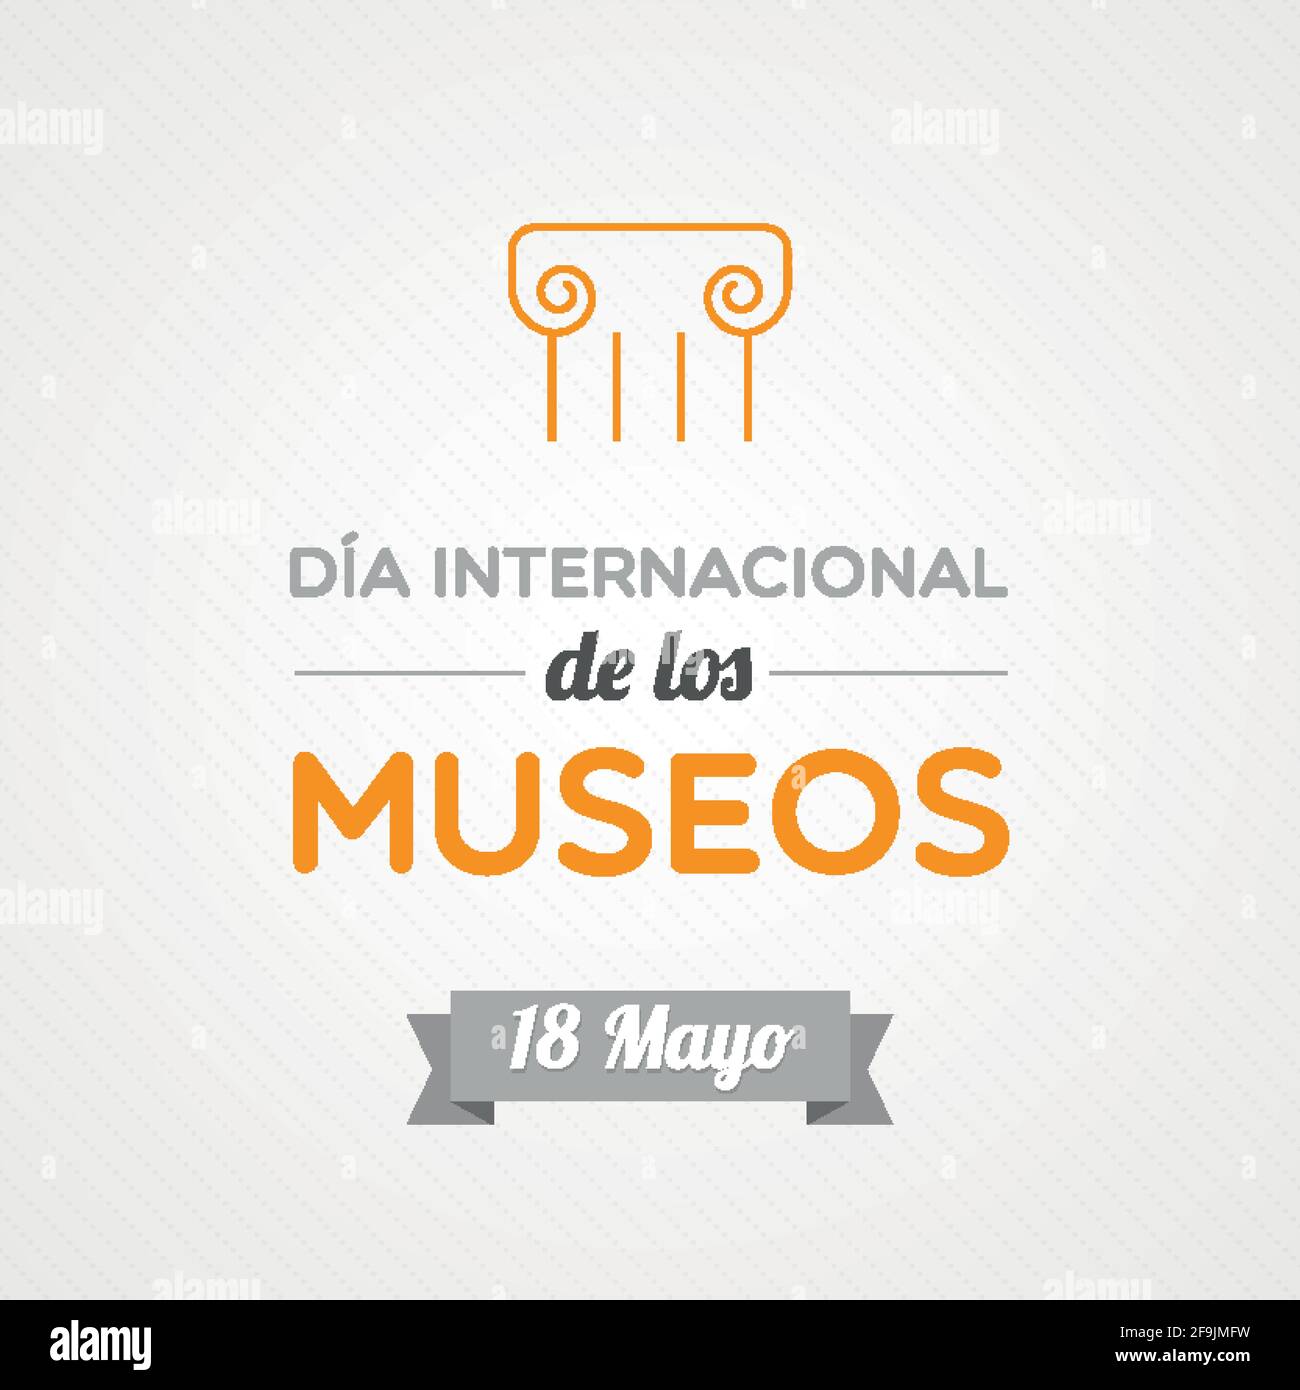 Internationaler Museumstag auf Spanisch. Mai 18. Vektorgrafik, flaches Design Stock Vektor